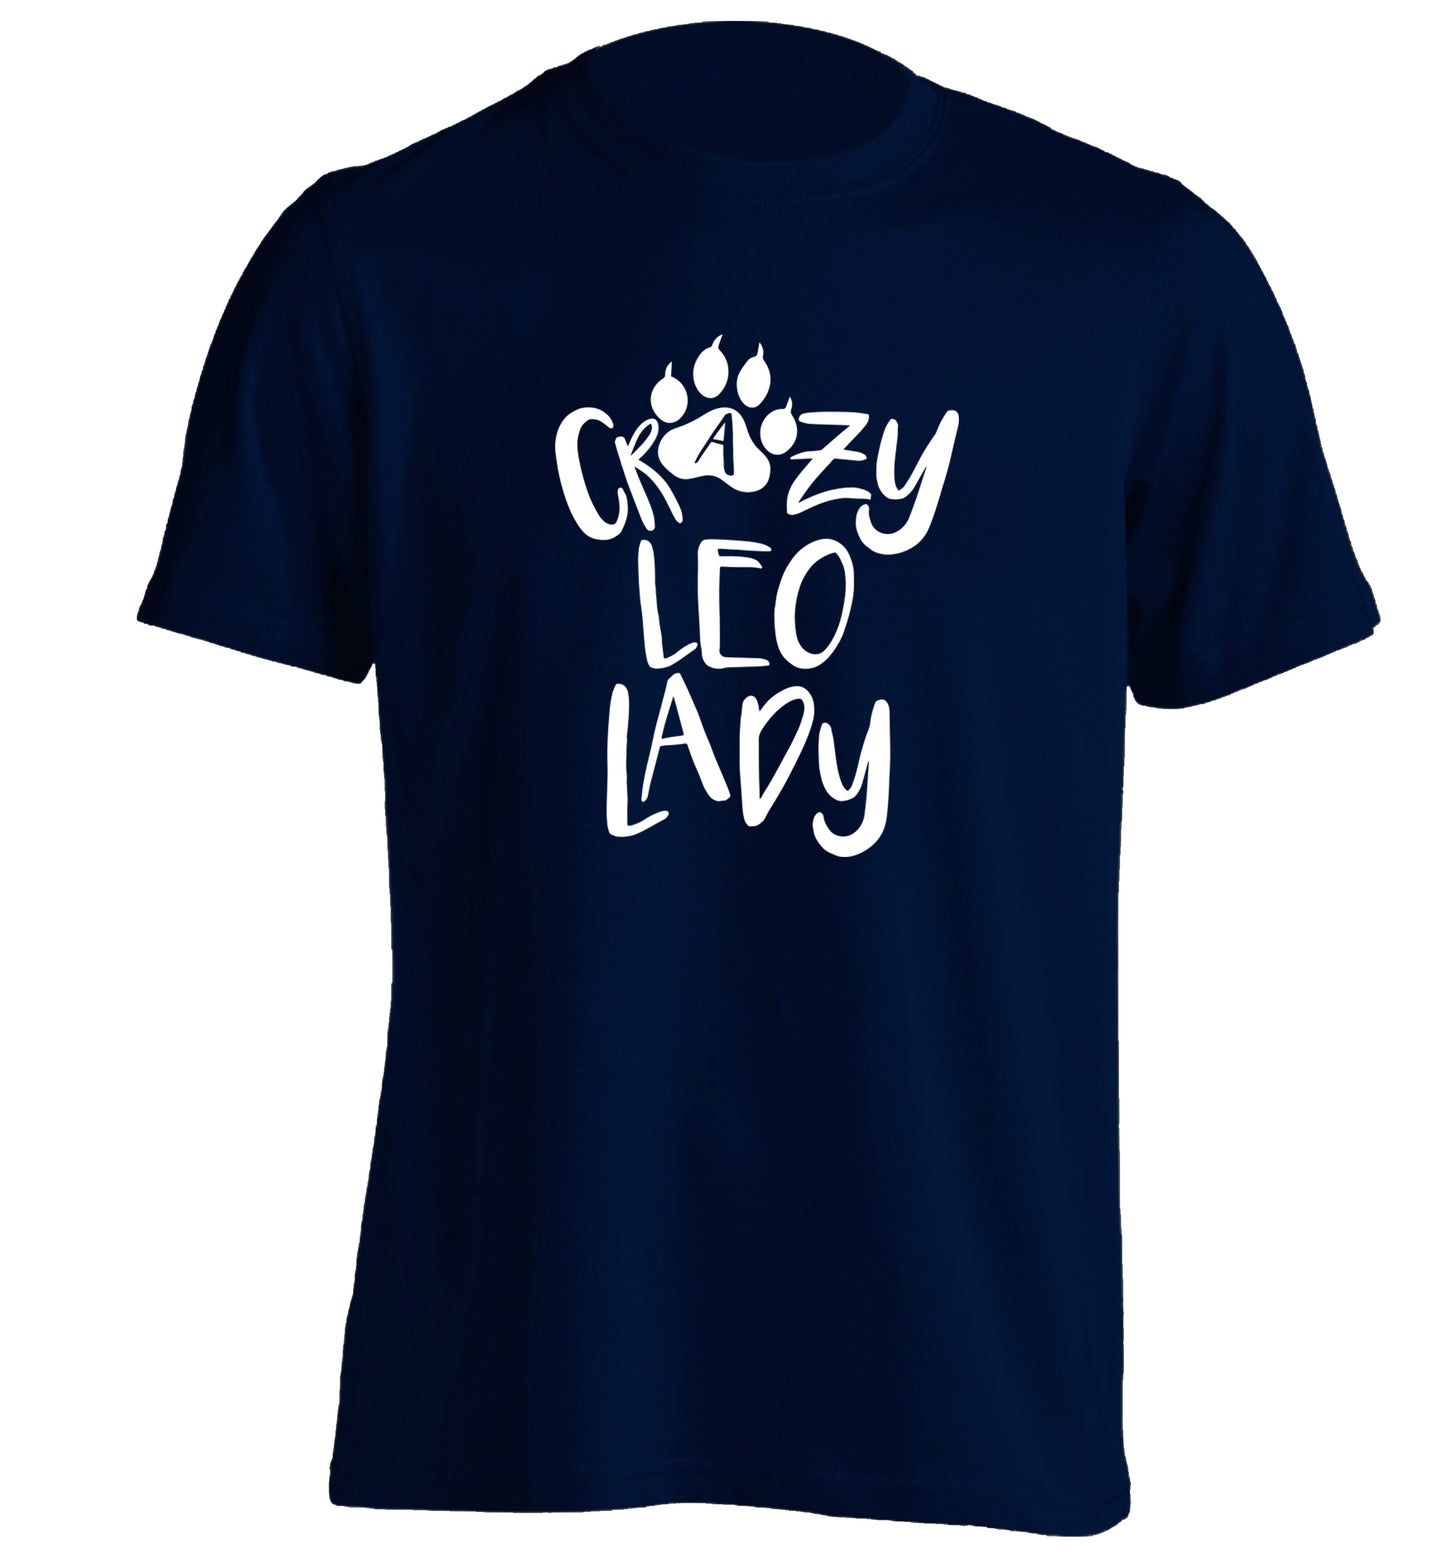 Crazy leo lady adults unisex navy Tshirt 2XL